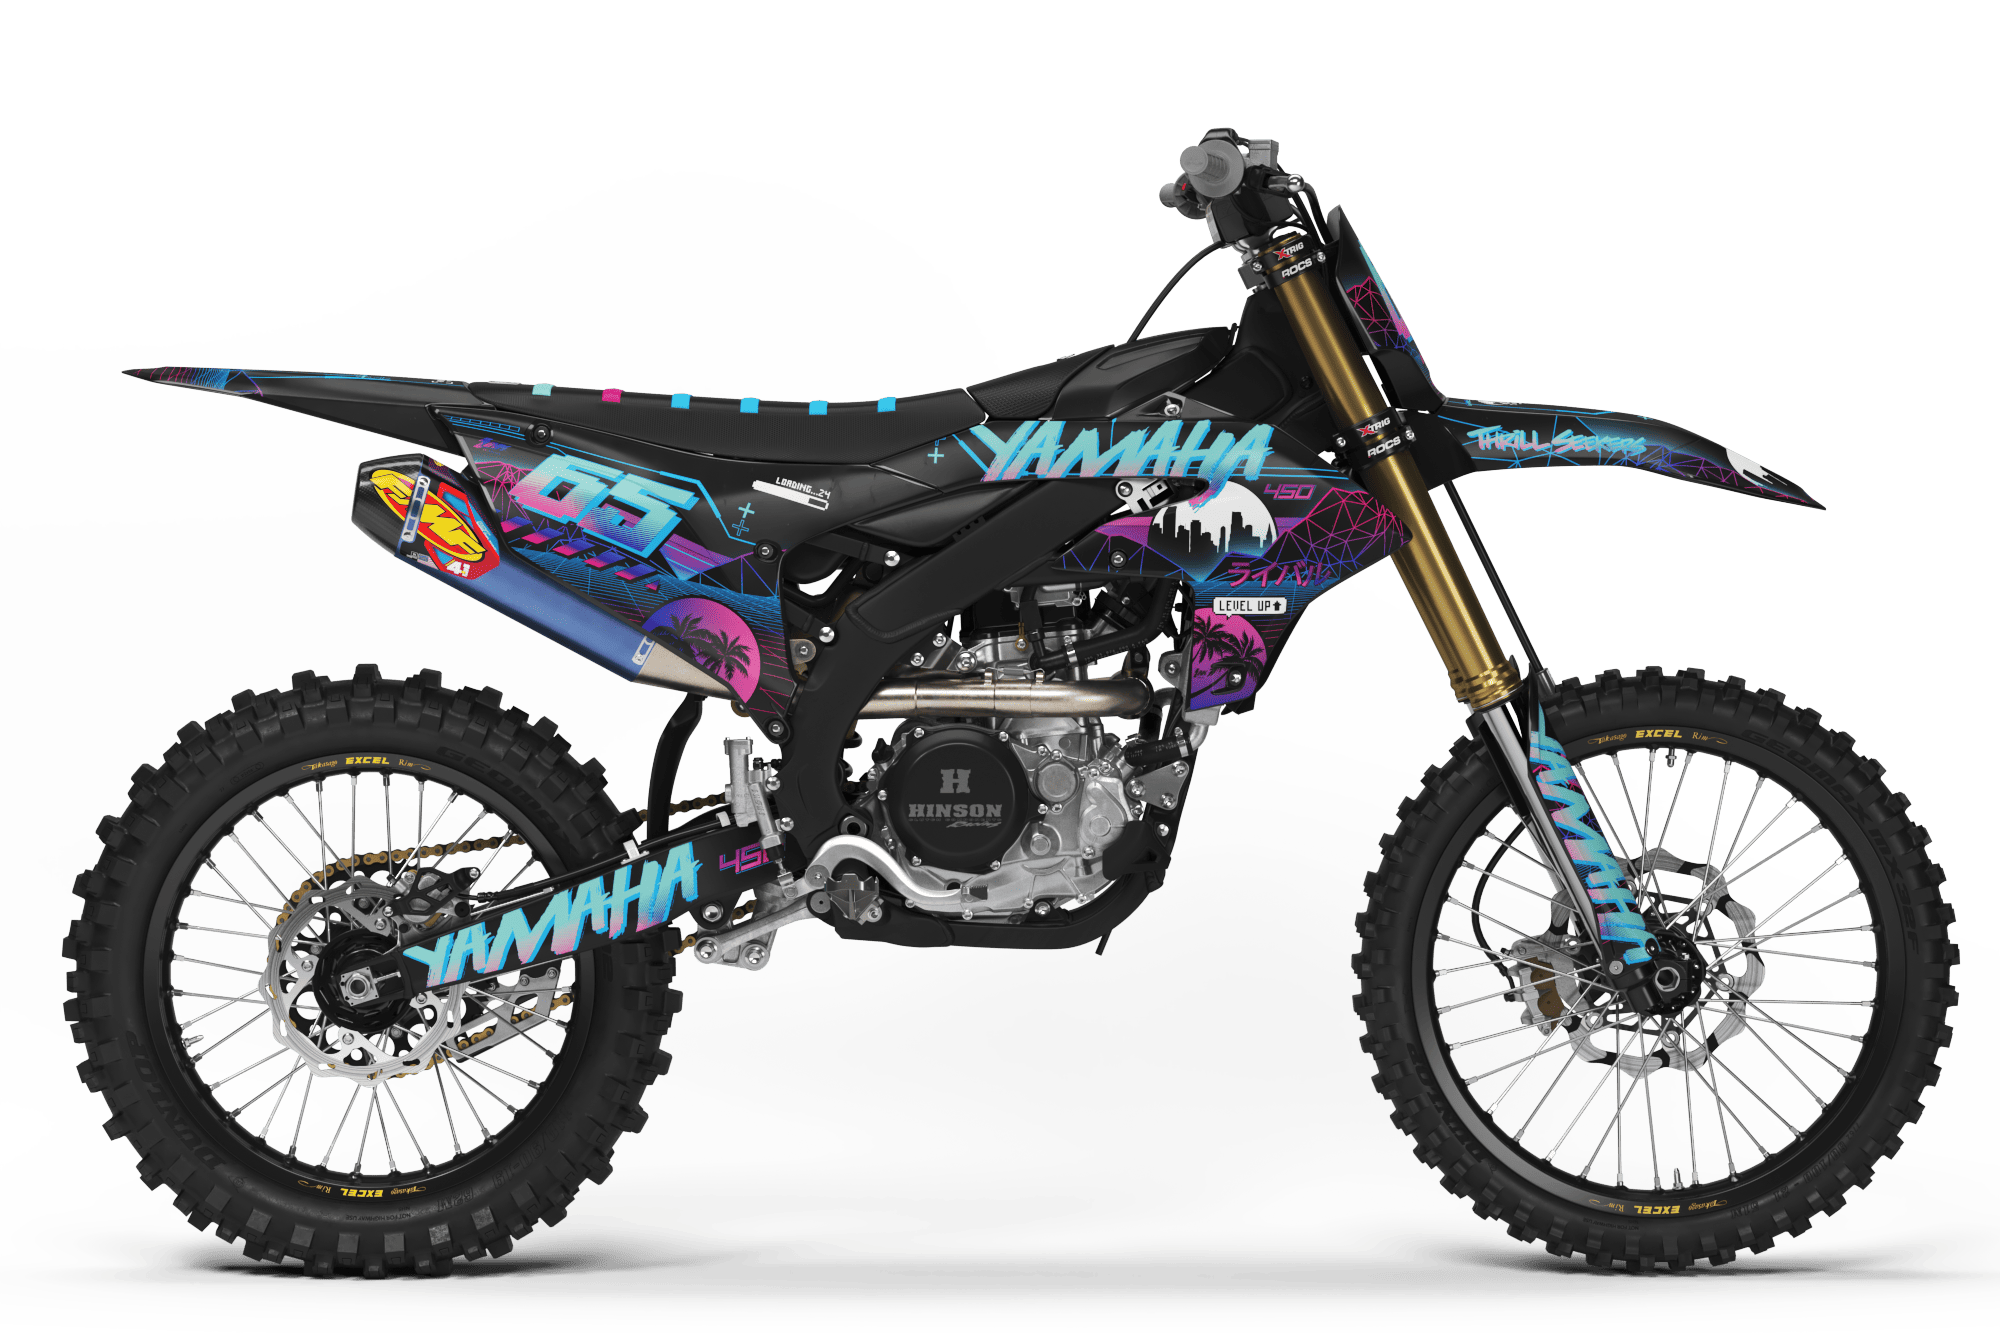 Custom Yamaha Dirt Bike Heet Blue Graphics - FREE SHIPPING